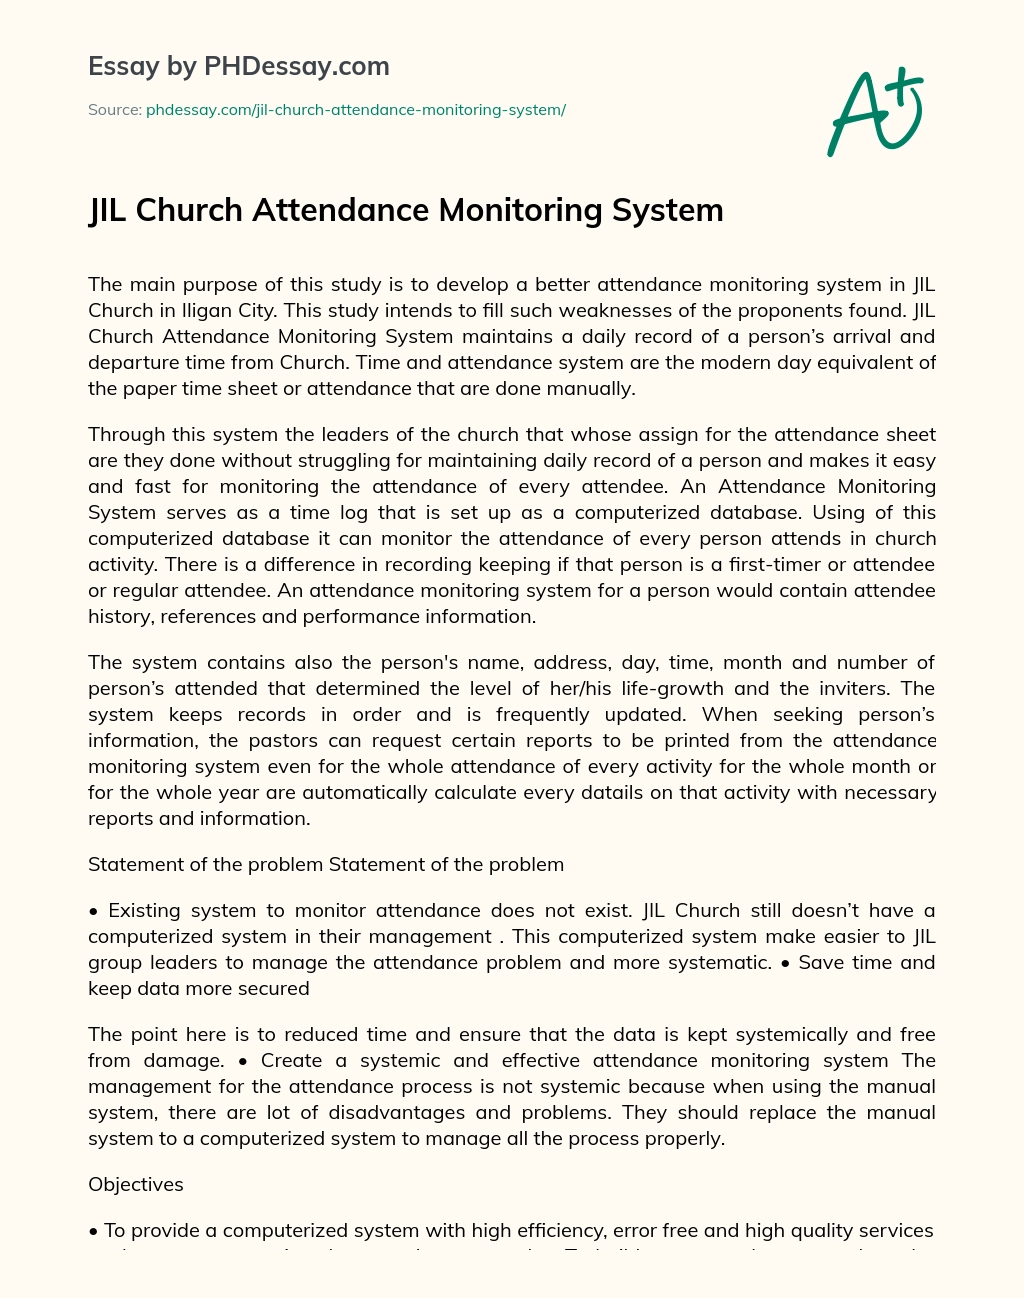 JIL Church Attendance Monitoring System essay